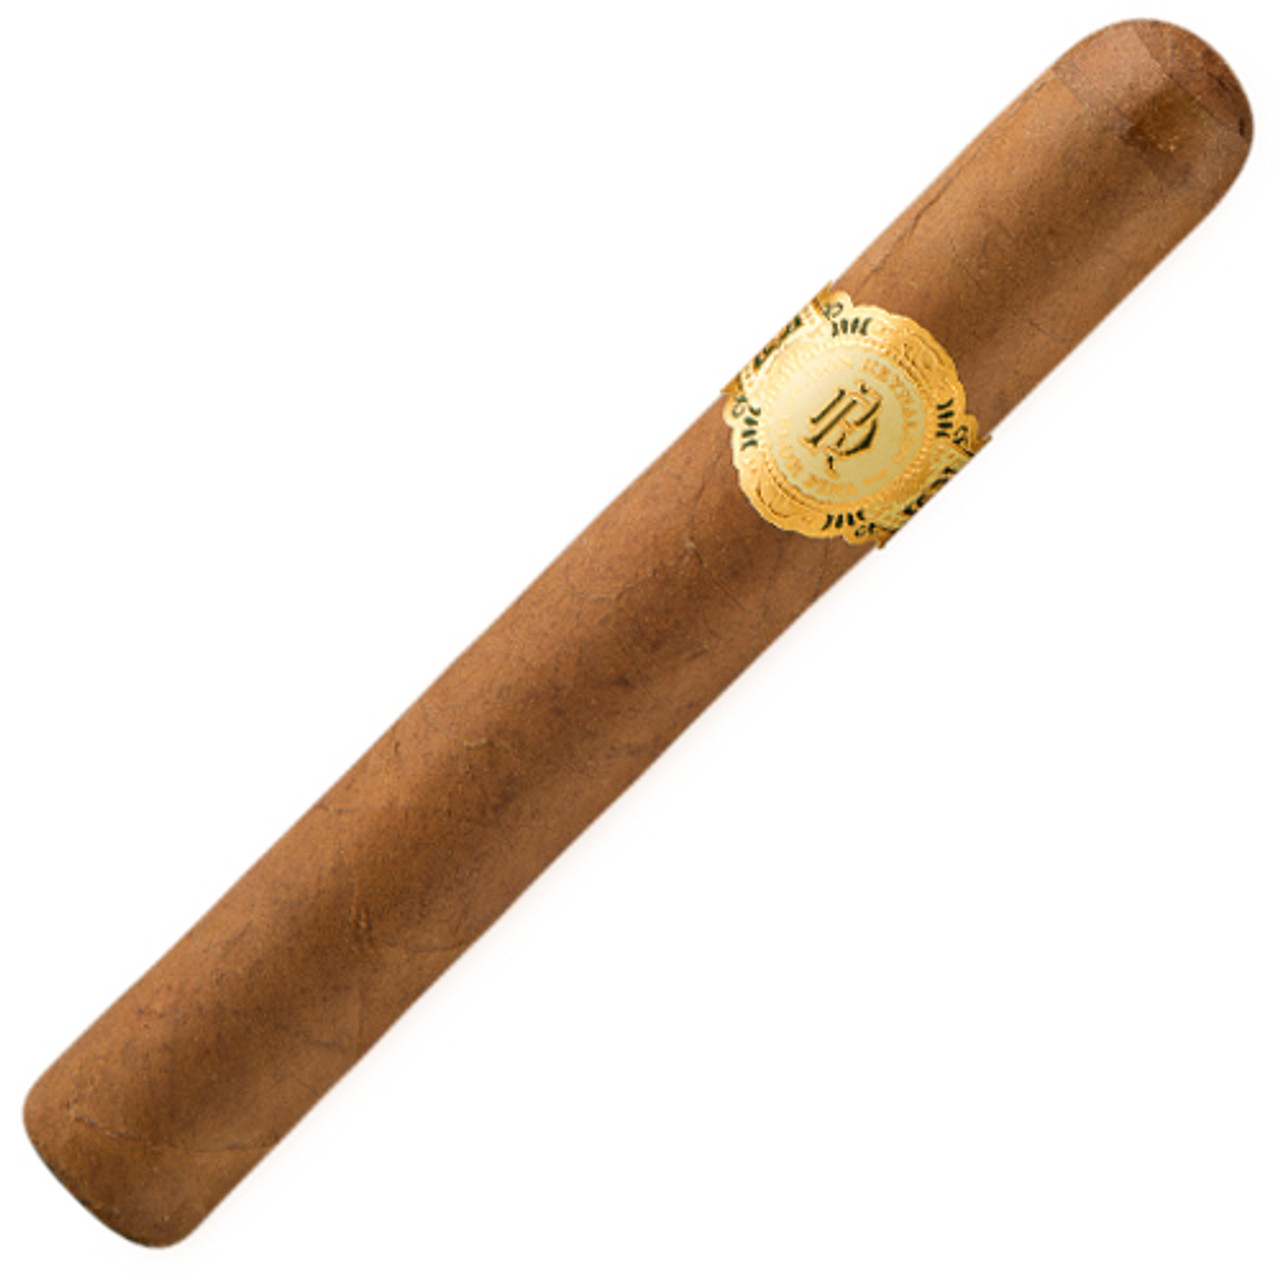 Warped Don Reynaldo Regalos Cigars - 5 x 46 (Box of 10)